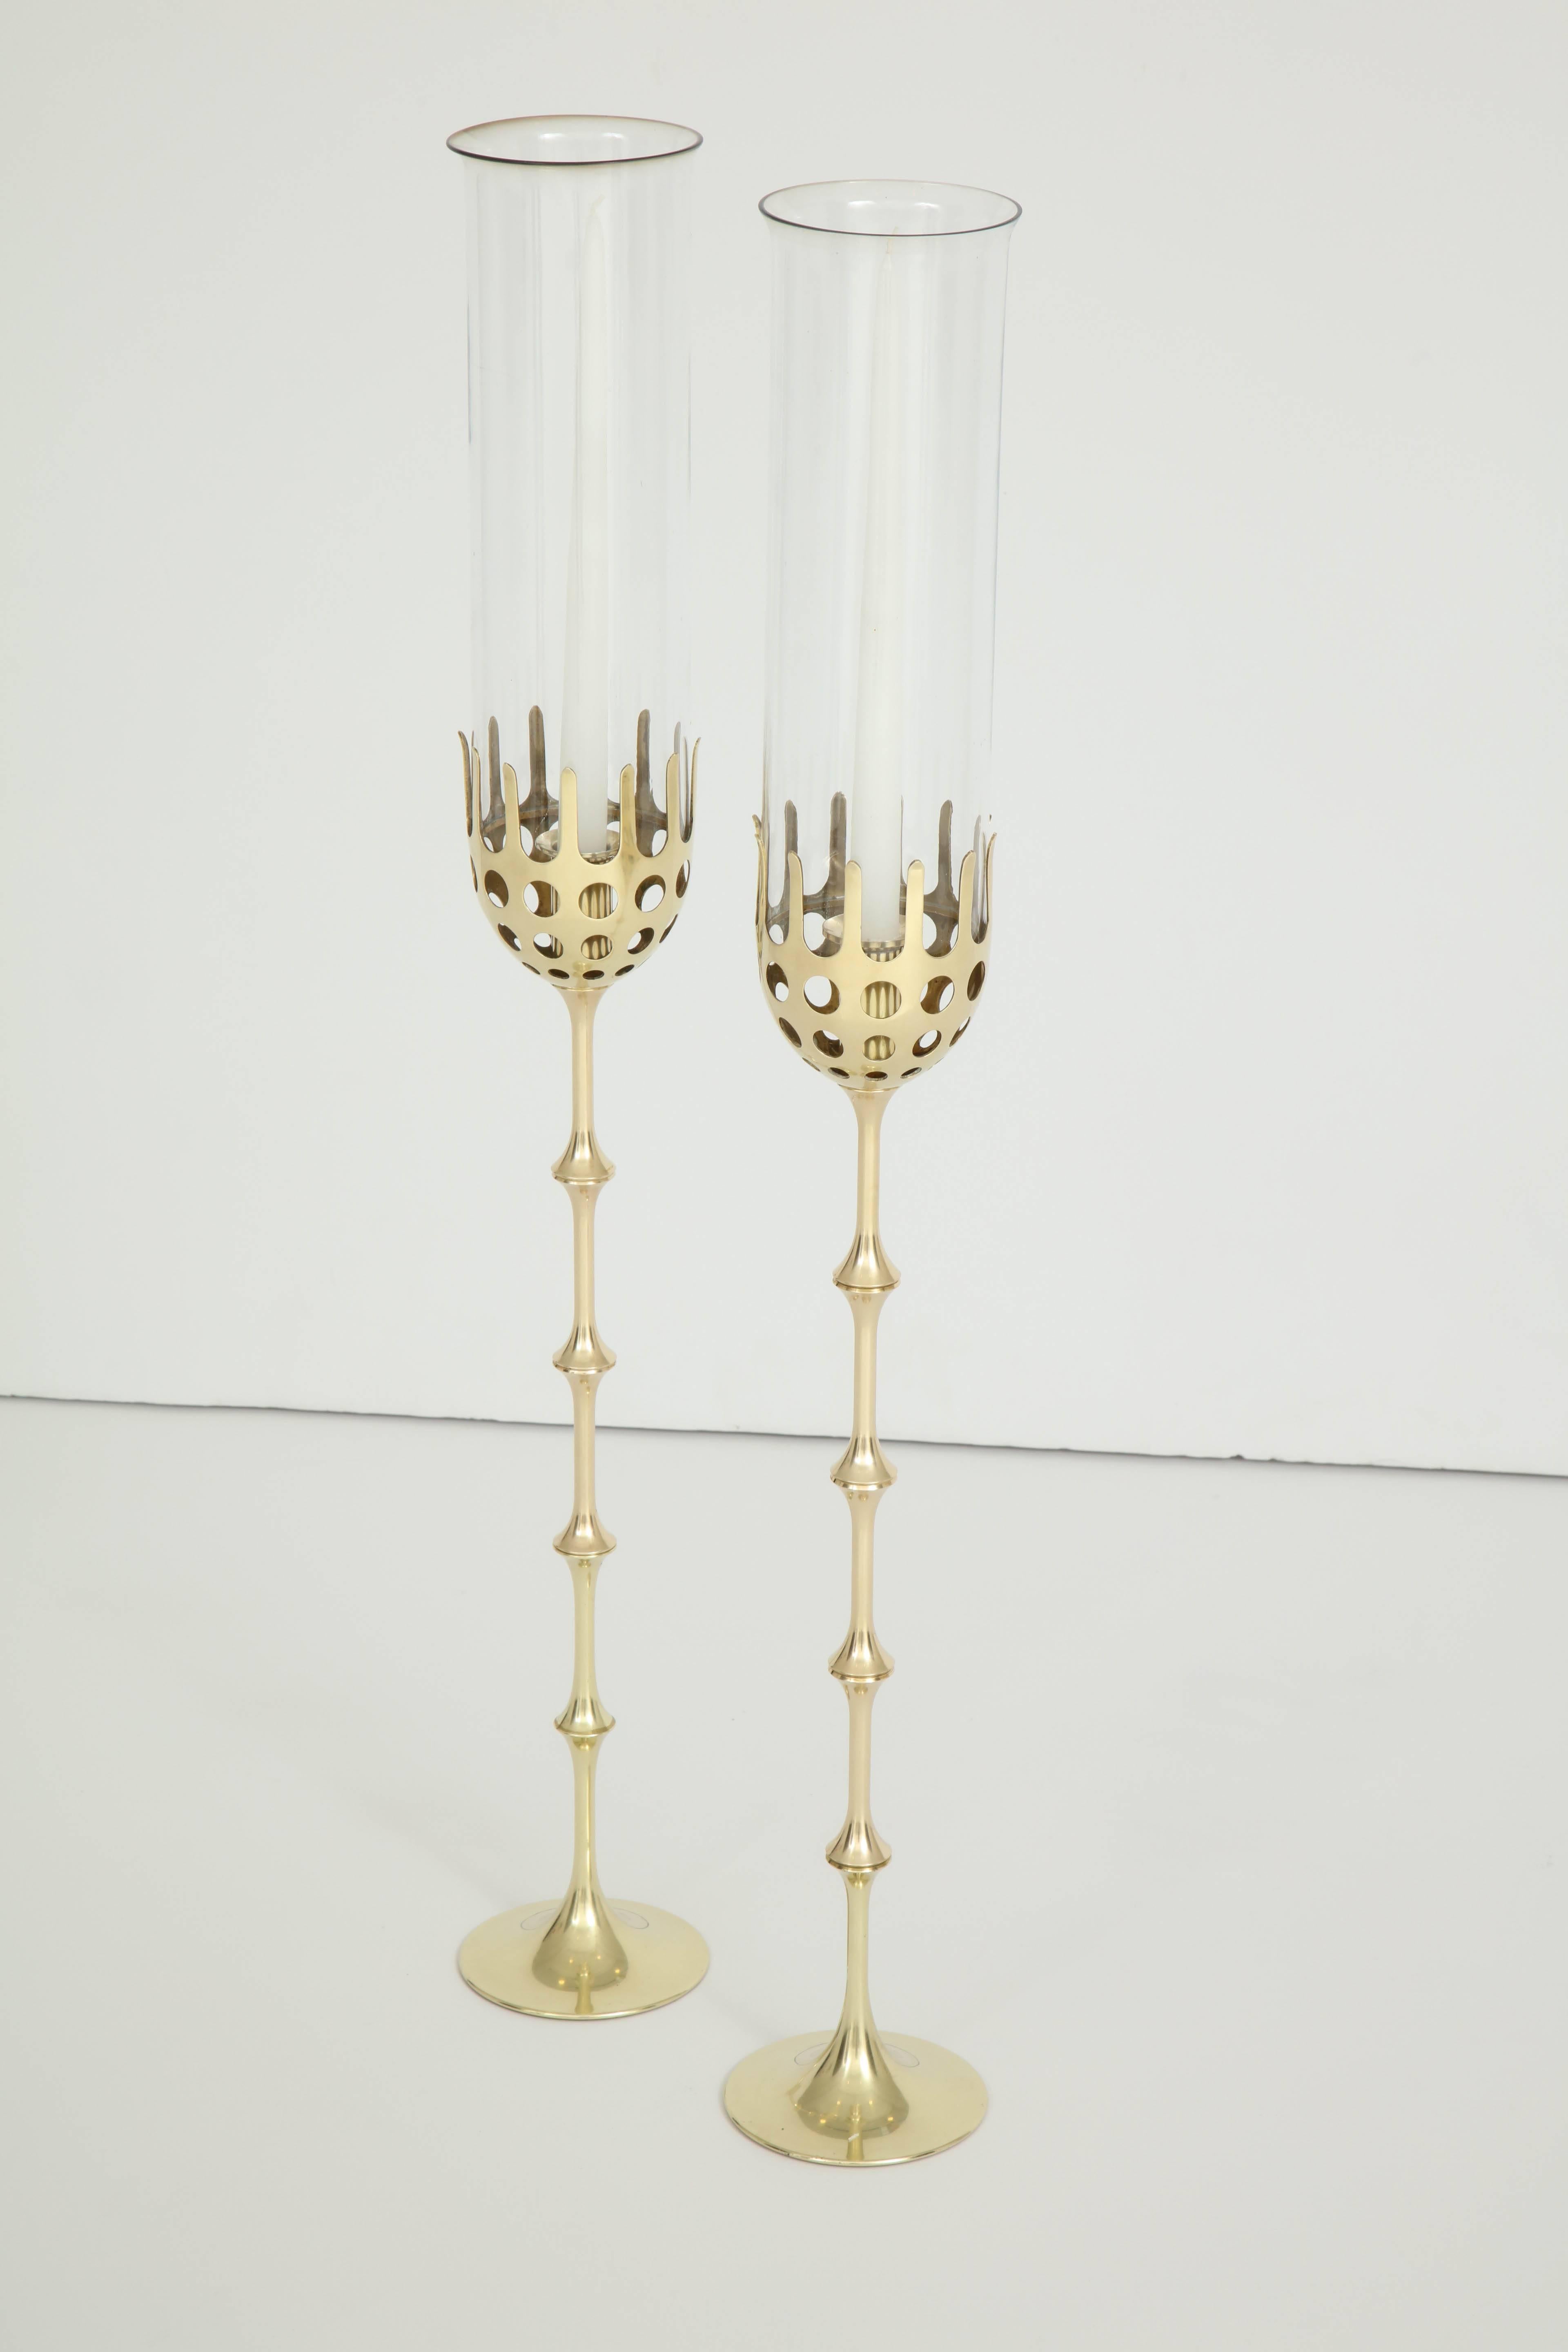 Danish Pair of Bjorn Wiinblad Brass and Glass Candlesticks, circa 1980s